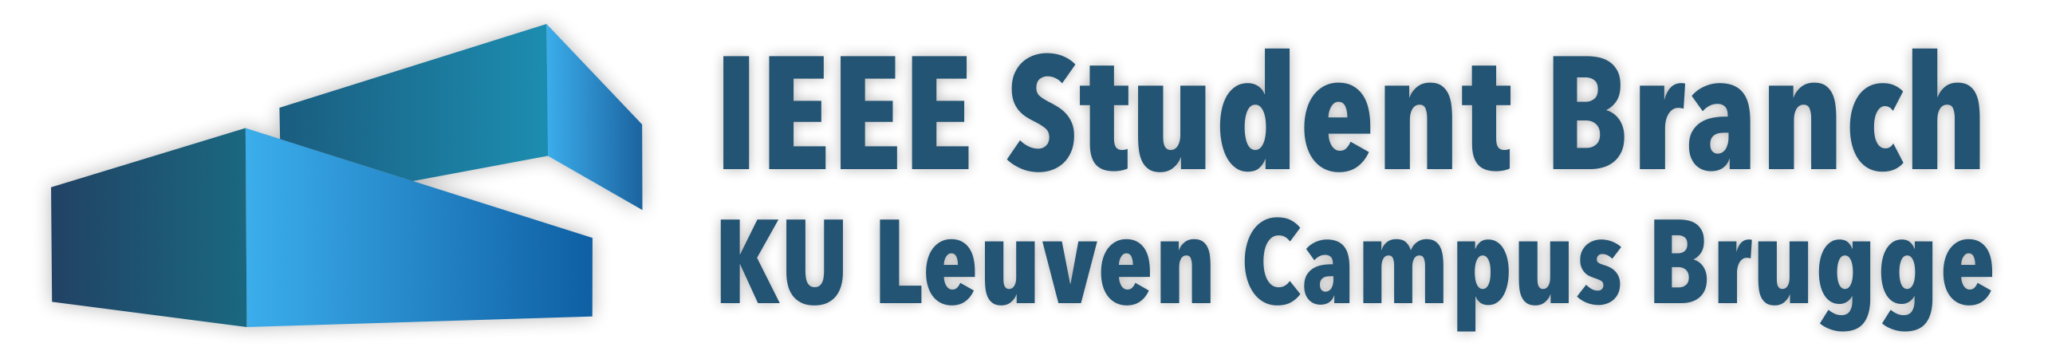 IEEE Student Branch KU Leuven Campus Brugge